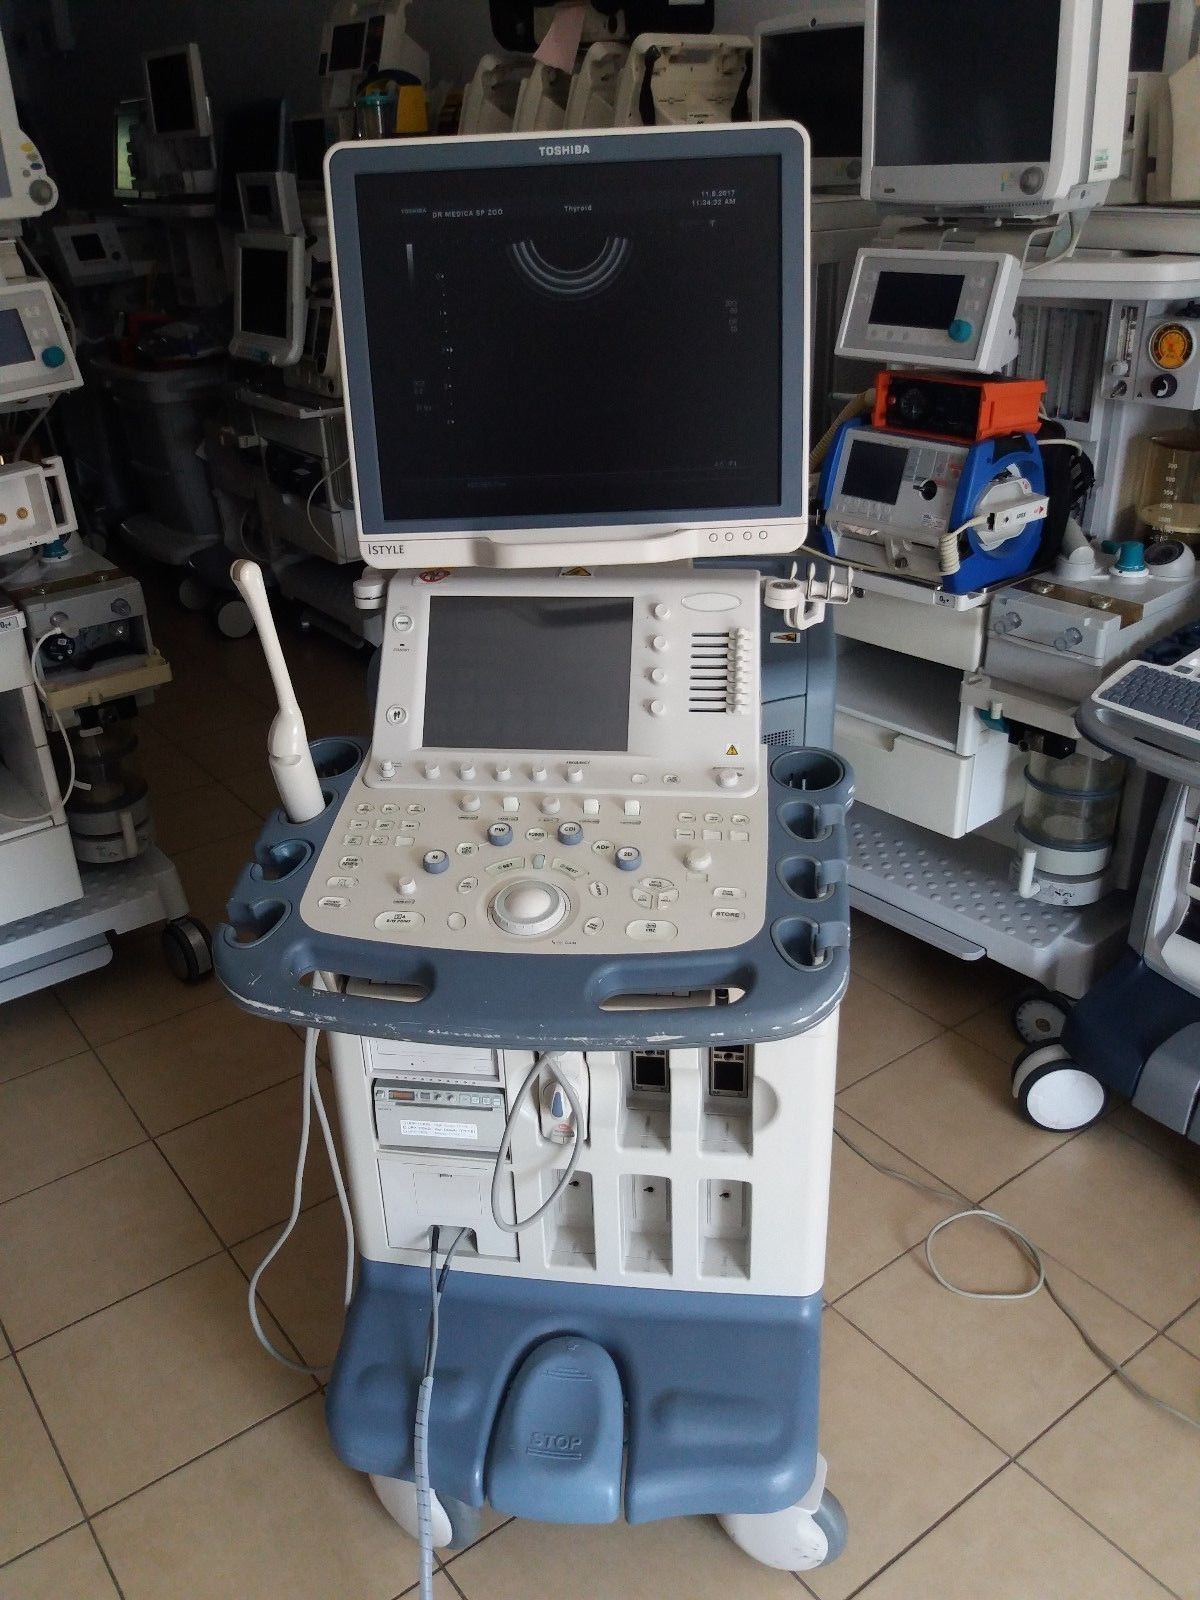 Ultrasound system Toshiba Aplio XG SSA-790A DOM 2008 230V AC power DIAGNOSTIC ULTRASOUND MACHINES FOR SALE